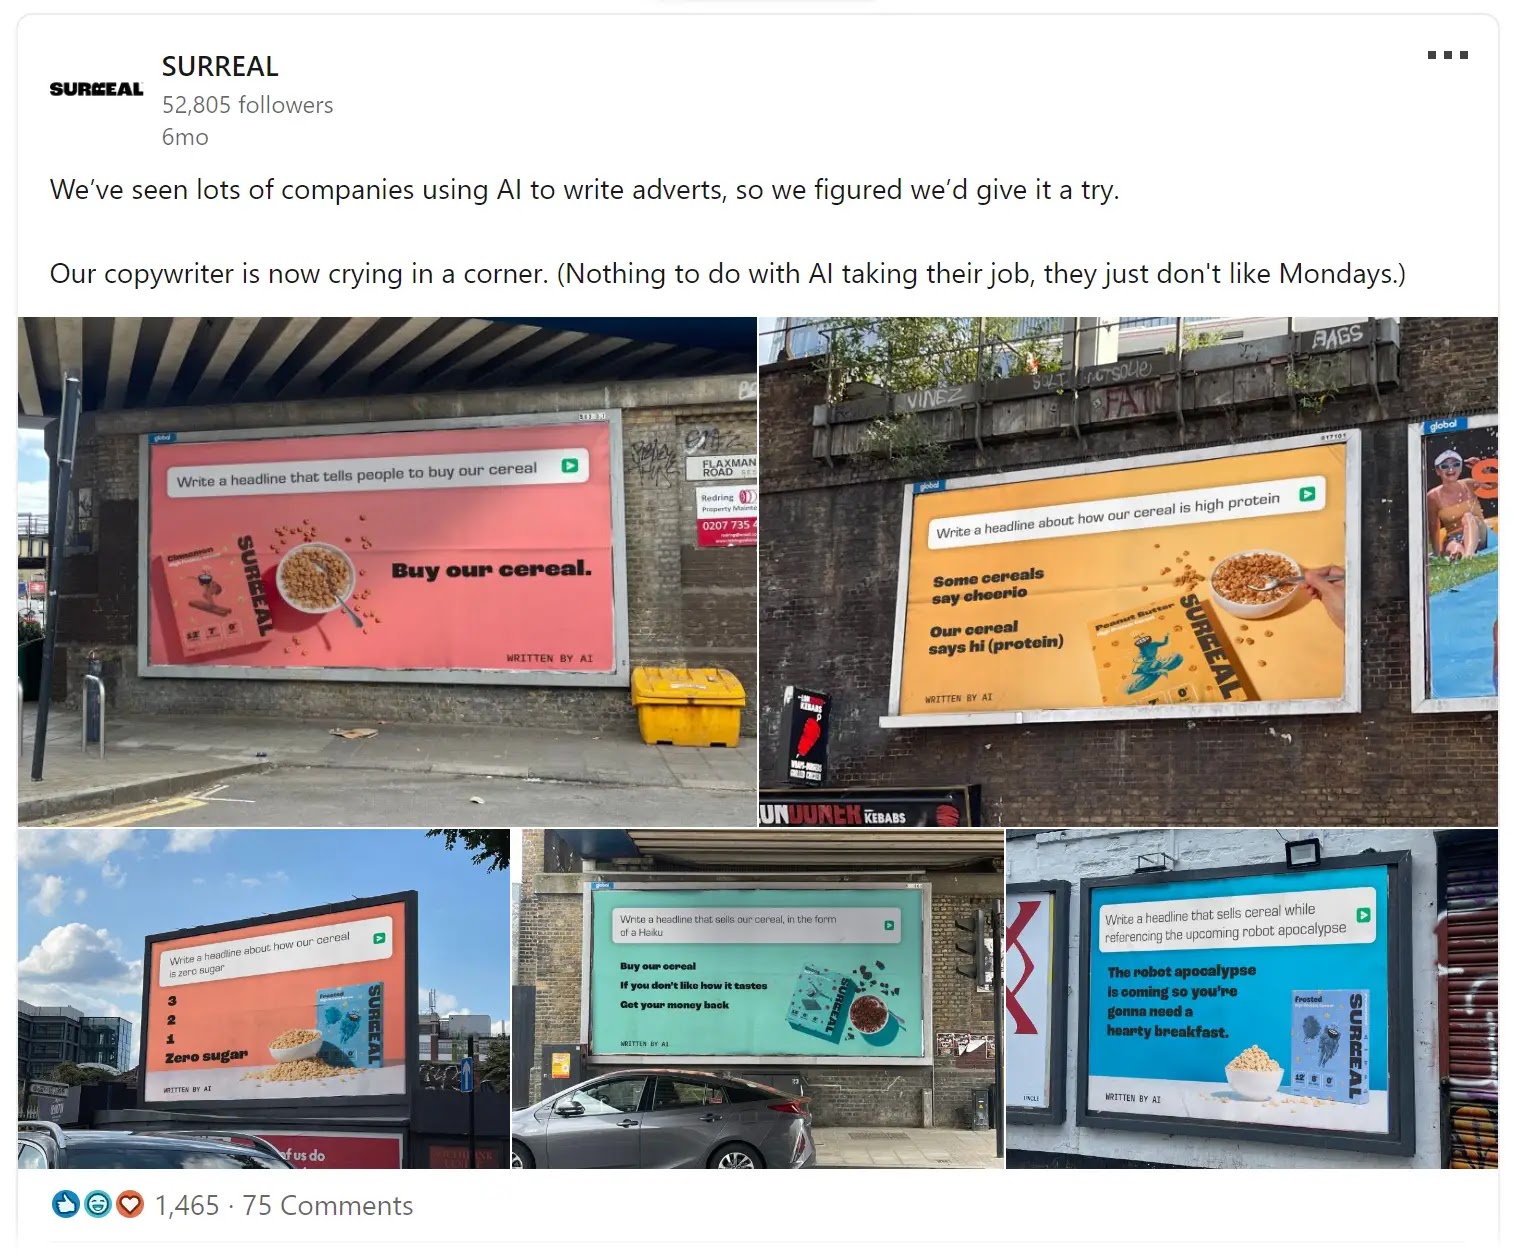 Surreal's Linkedin station  sharing brand's AI billboards